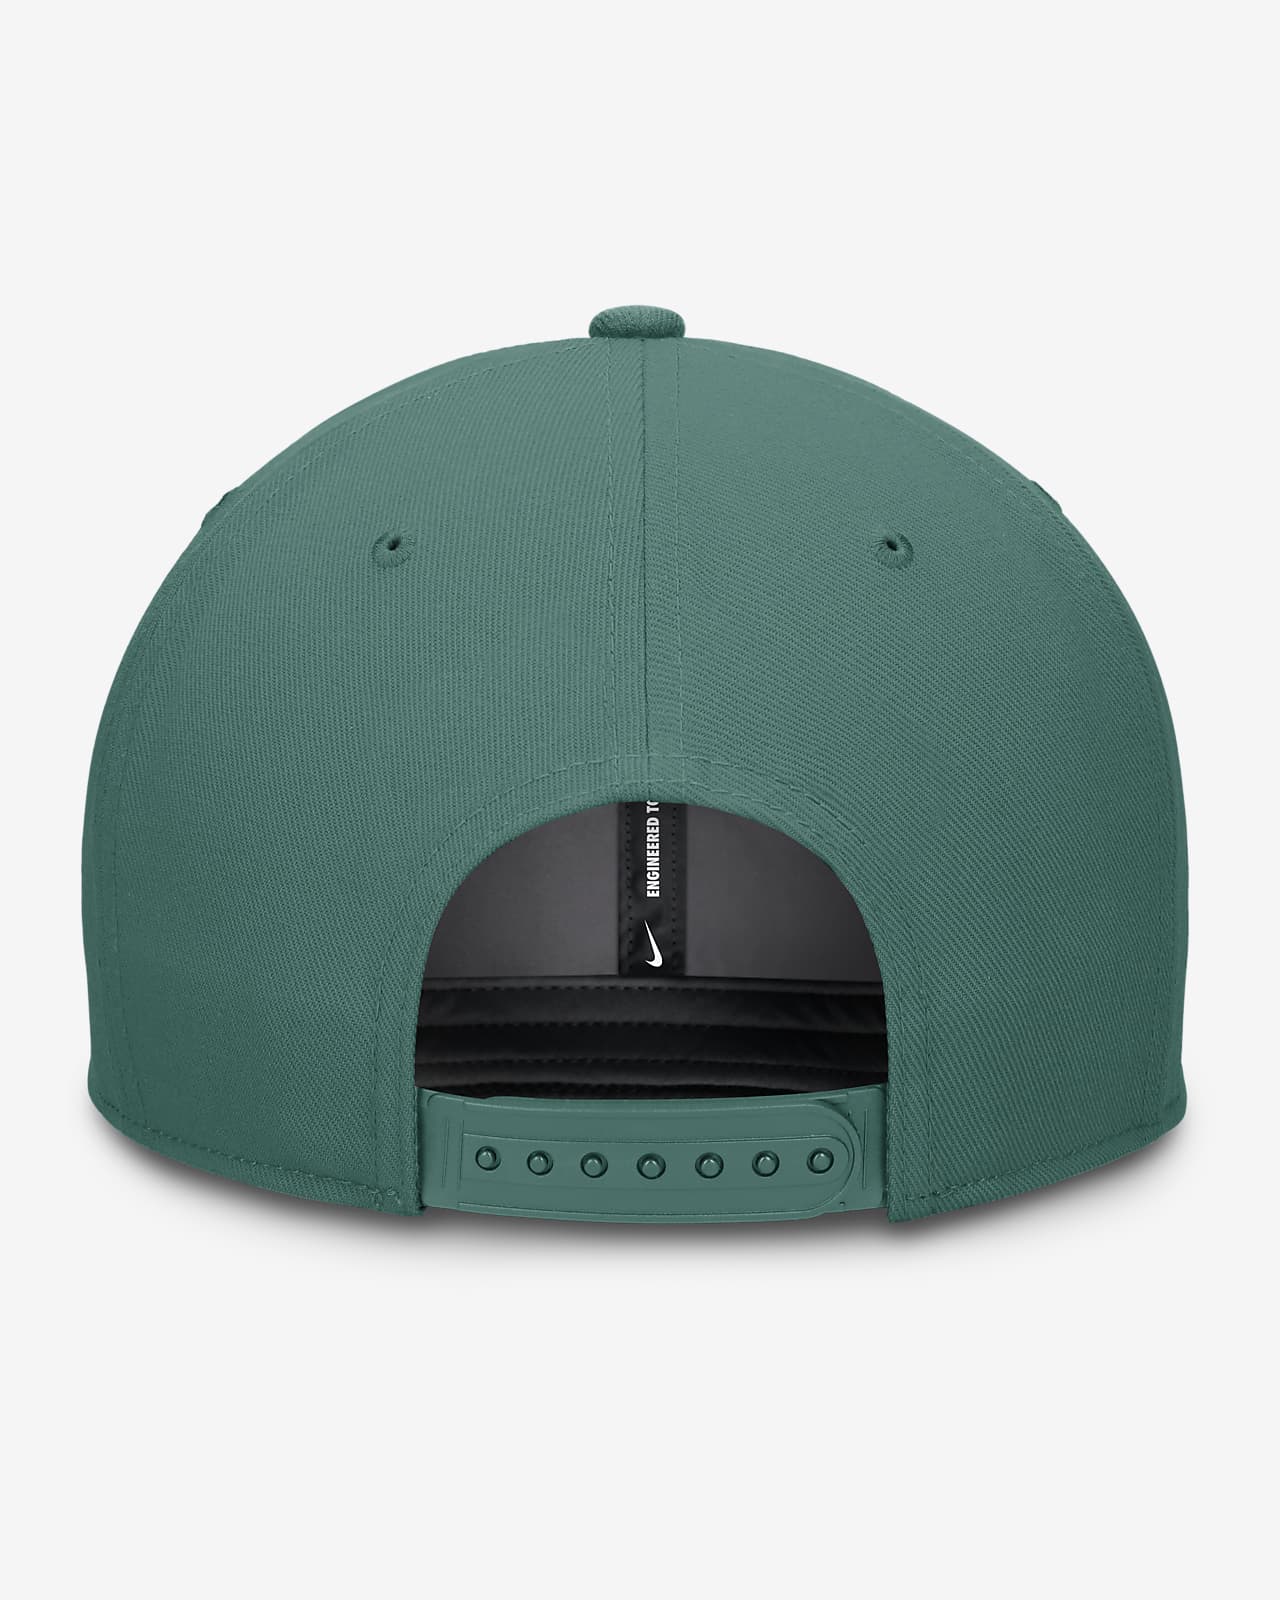 Texas Rangers Bicoastal Pro Men's Nike Dri-FIT MLB Adjustable Hat 